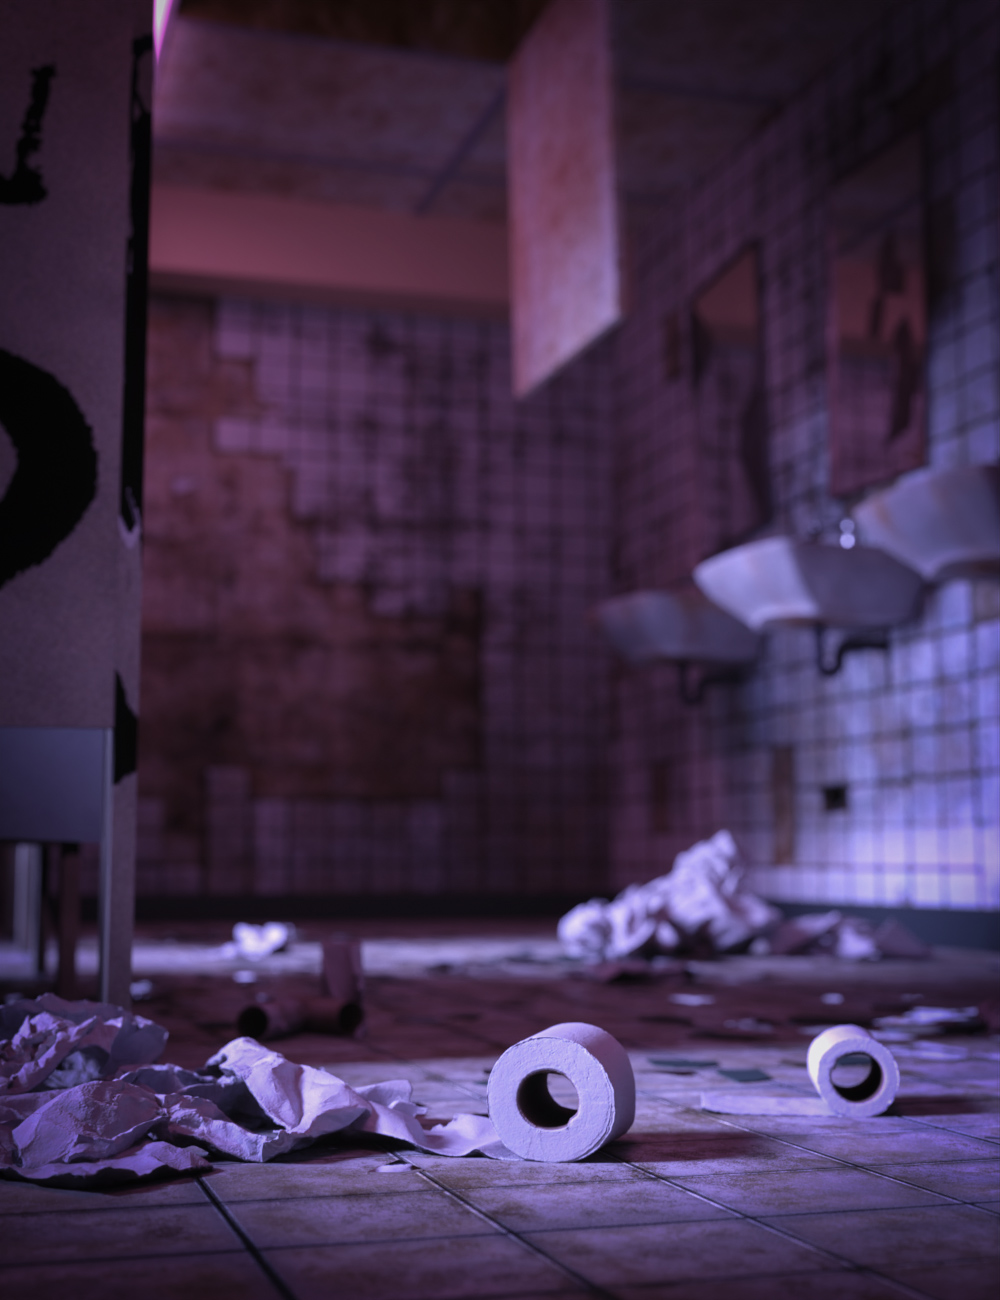 Toilet Paper On The Floor by: Dreamlight, 3D Models by Daz 3D